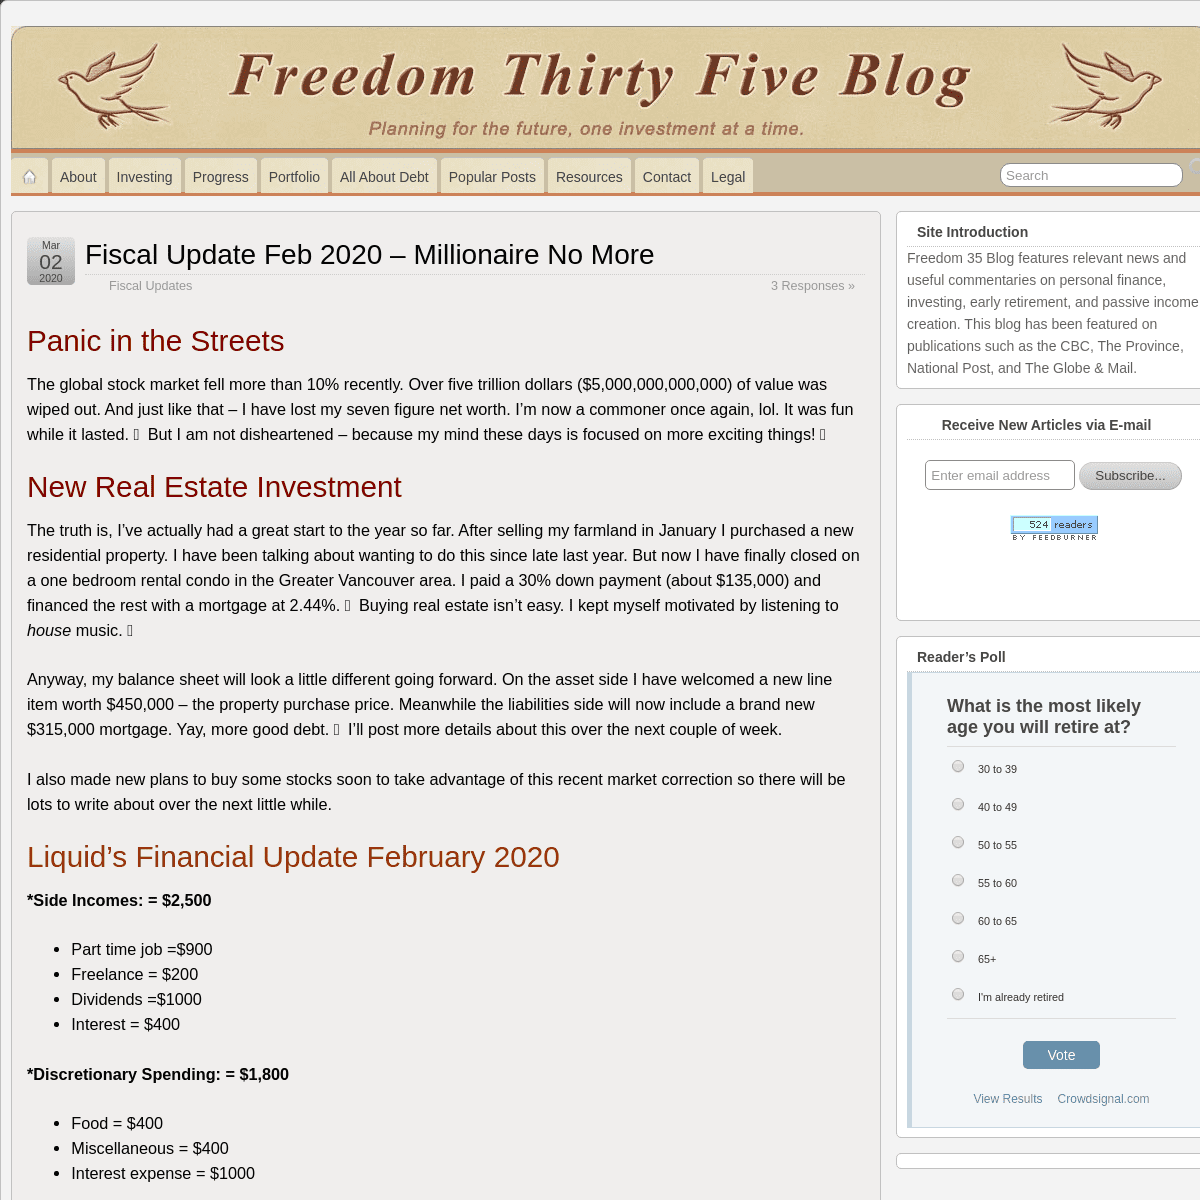 A complete backup of freedomthirtyfiveblog.com